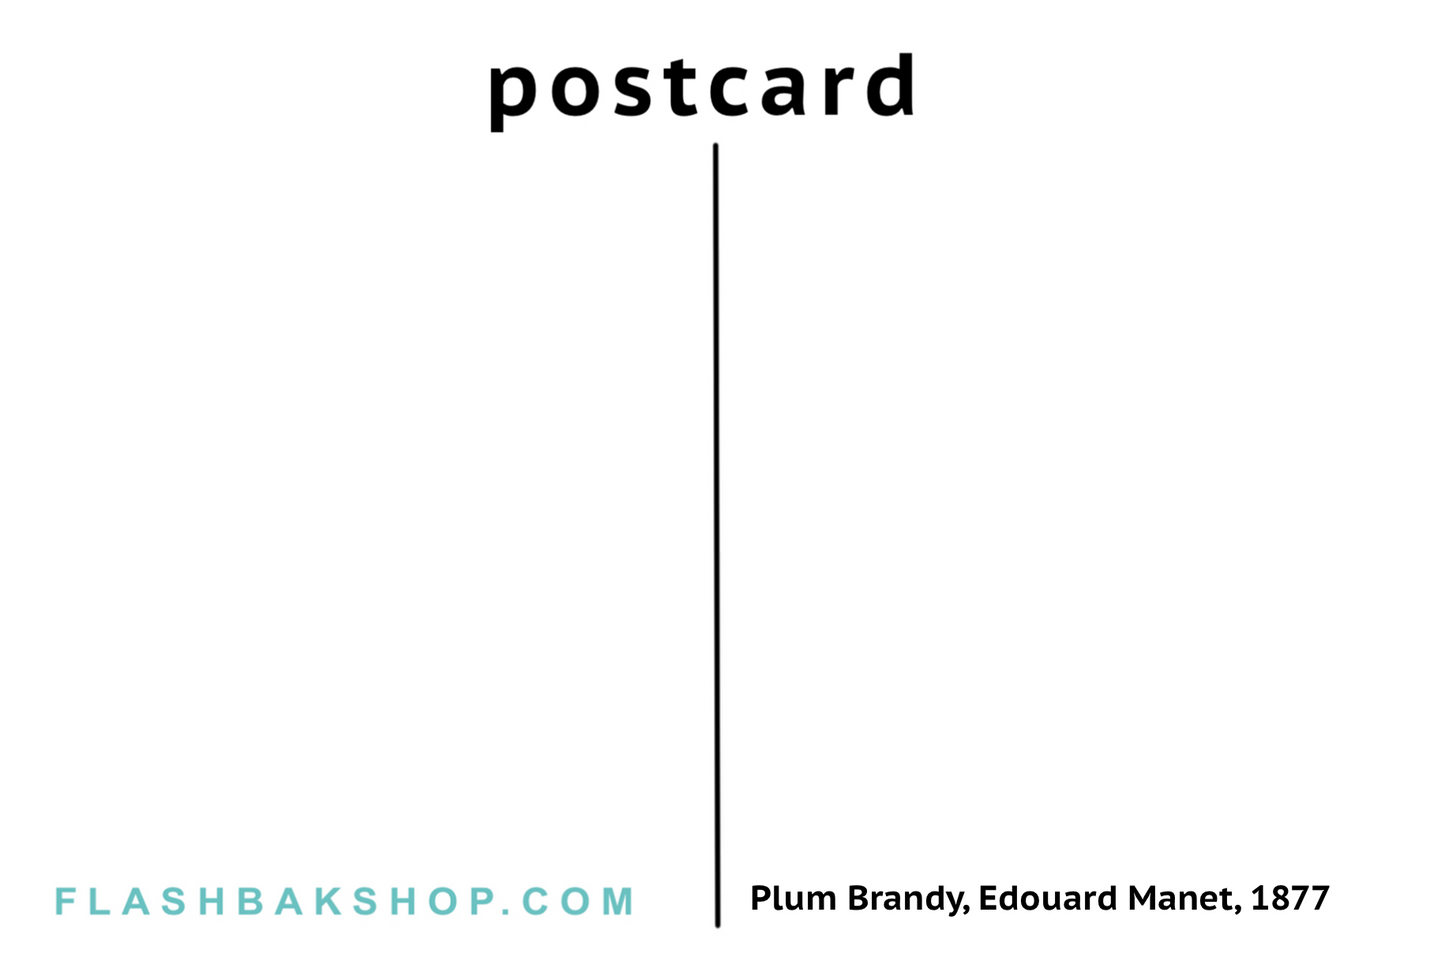 Plum Brandy by Edouard Manet, 1877 - Postcard